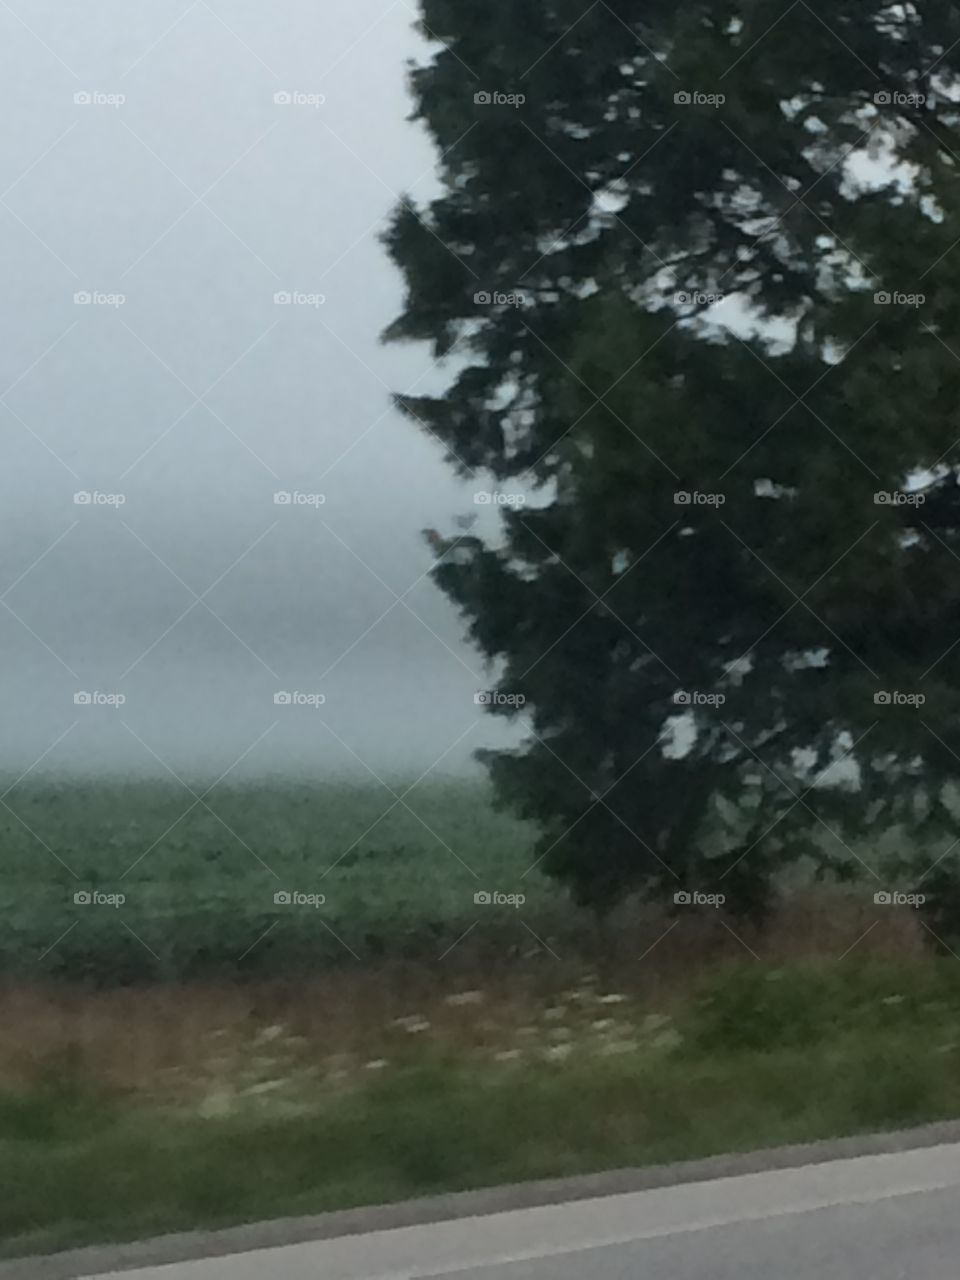 Foggy landscape 